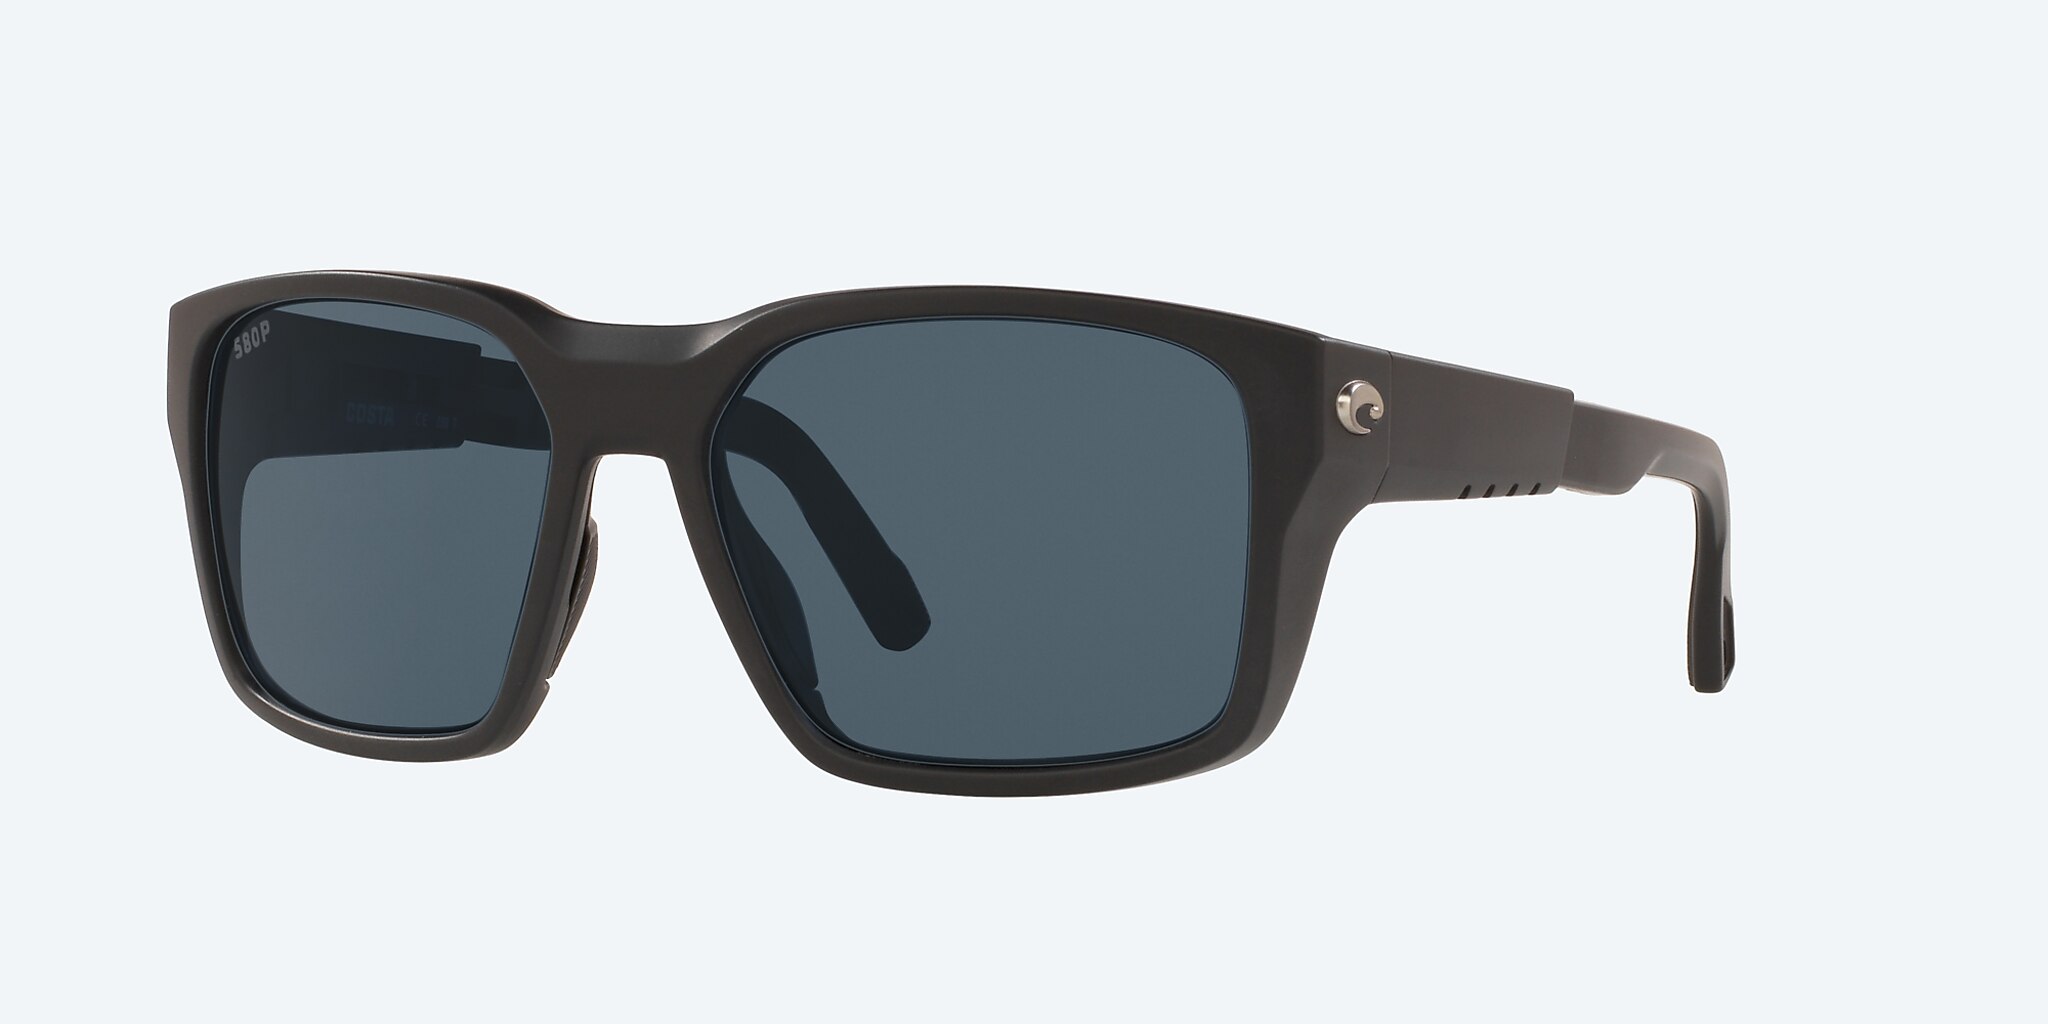 Tailwalker Polarized Sunglasses in Gray